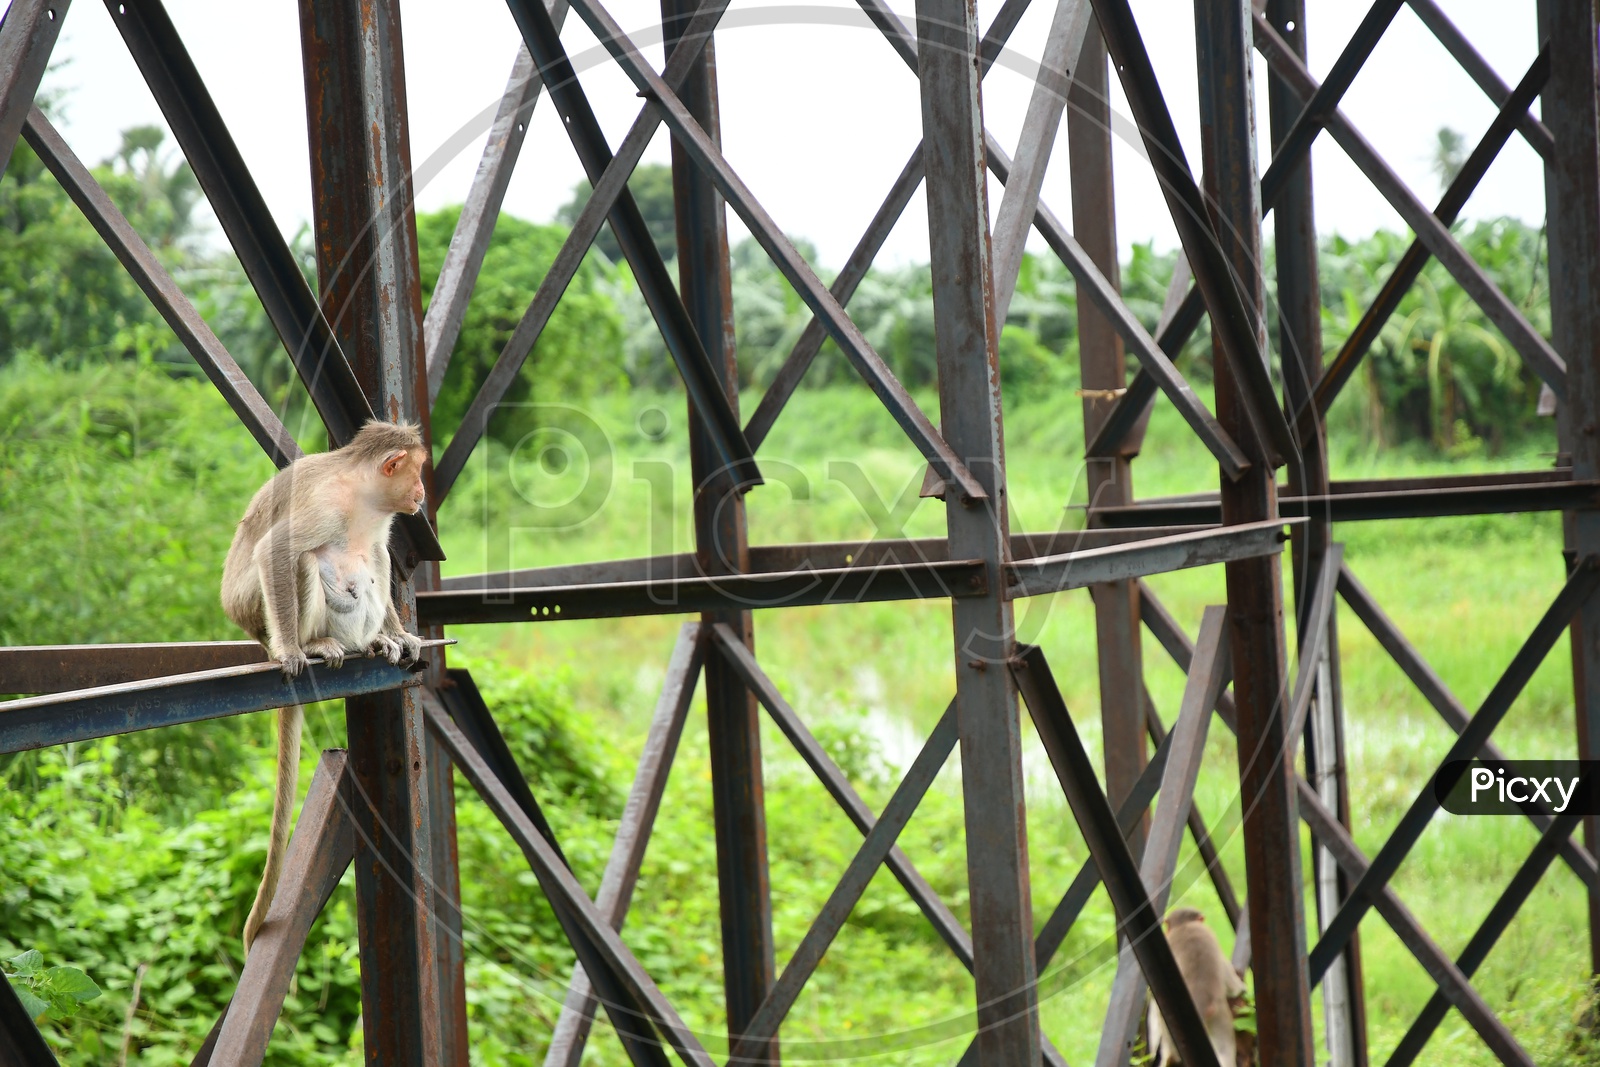 A Monkey sitting on the Iron bar